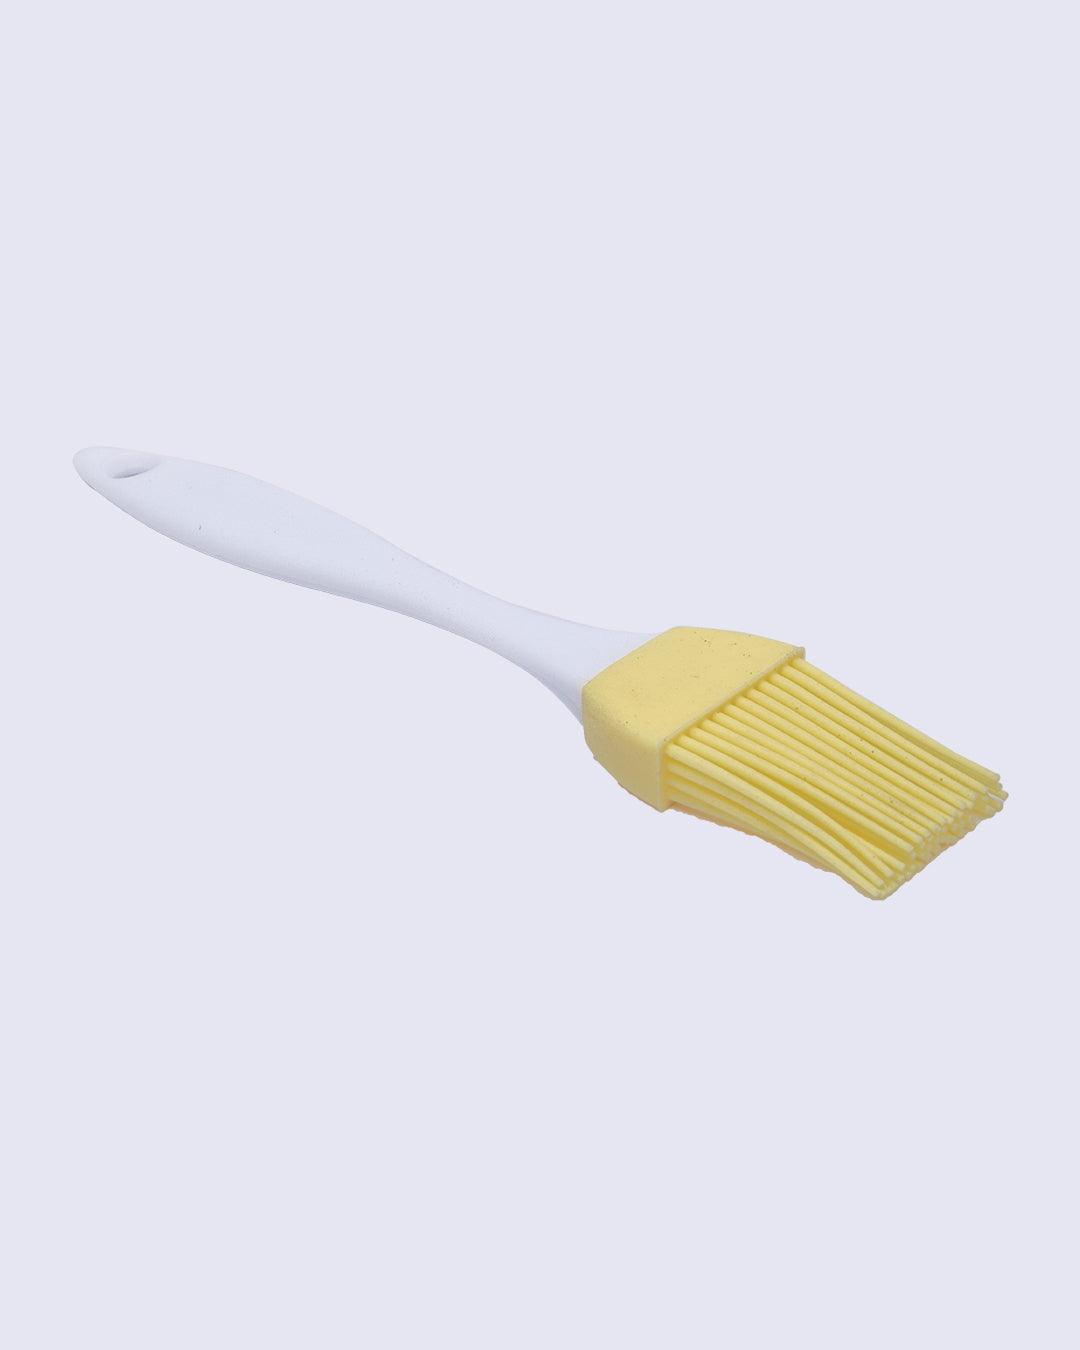 Oil Brush, Basting Brush, Pastry Brush for Cooking, Yellow, Plastic, Set of 2 - MARKET 99